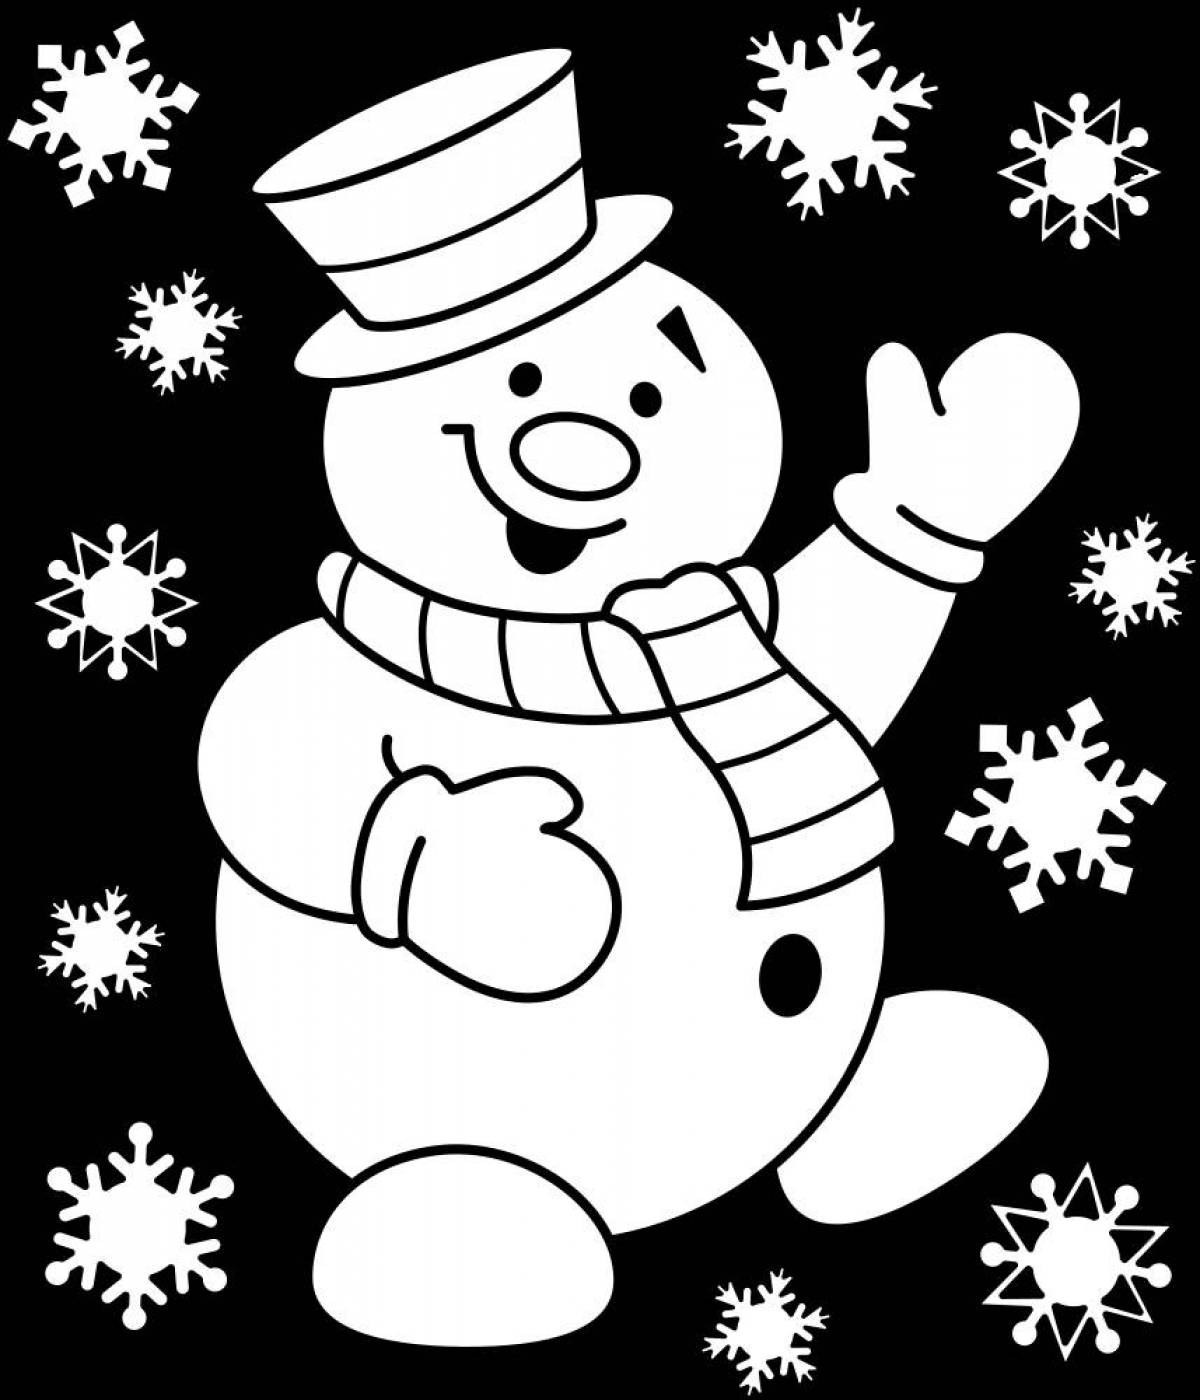 Snowman in snowflakes